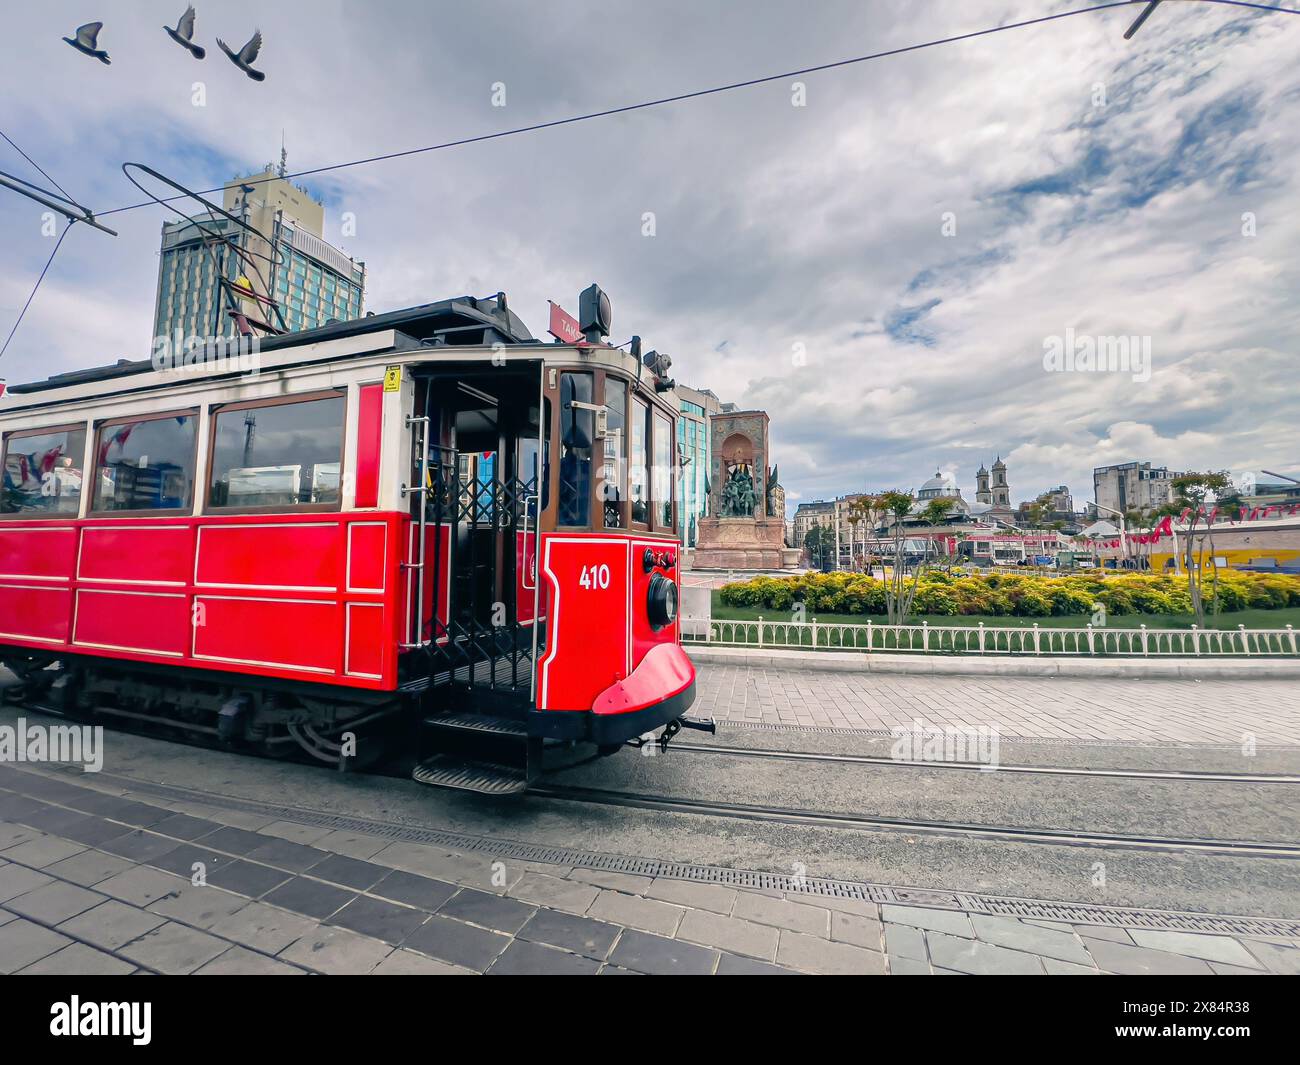 Ataturk statue and nostalgic tram in Taksim square in Istanbul Stock Photo